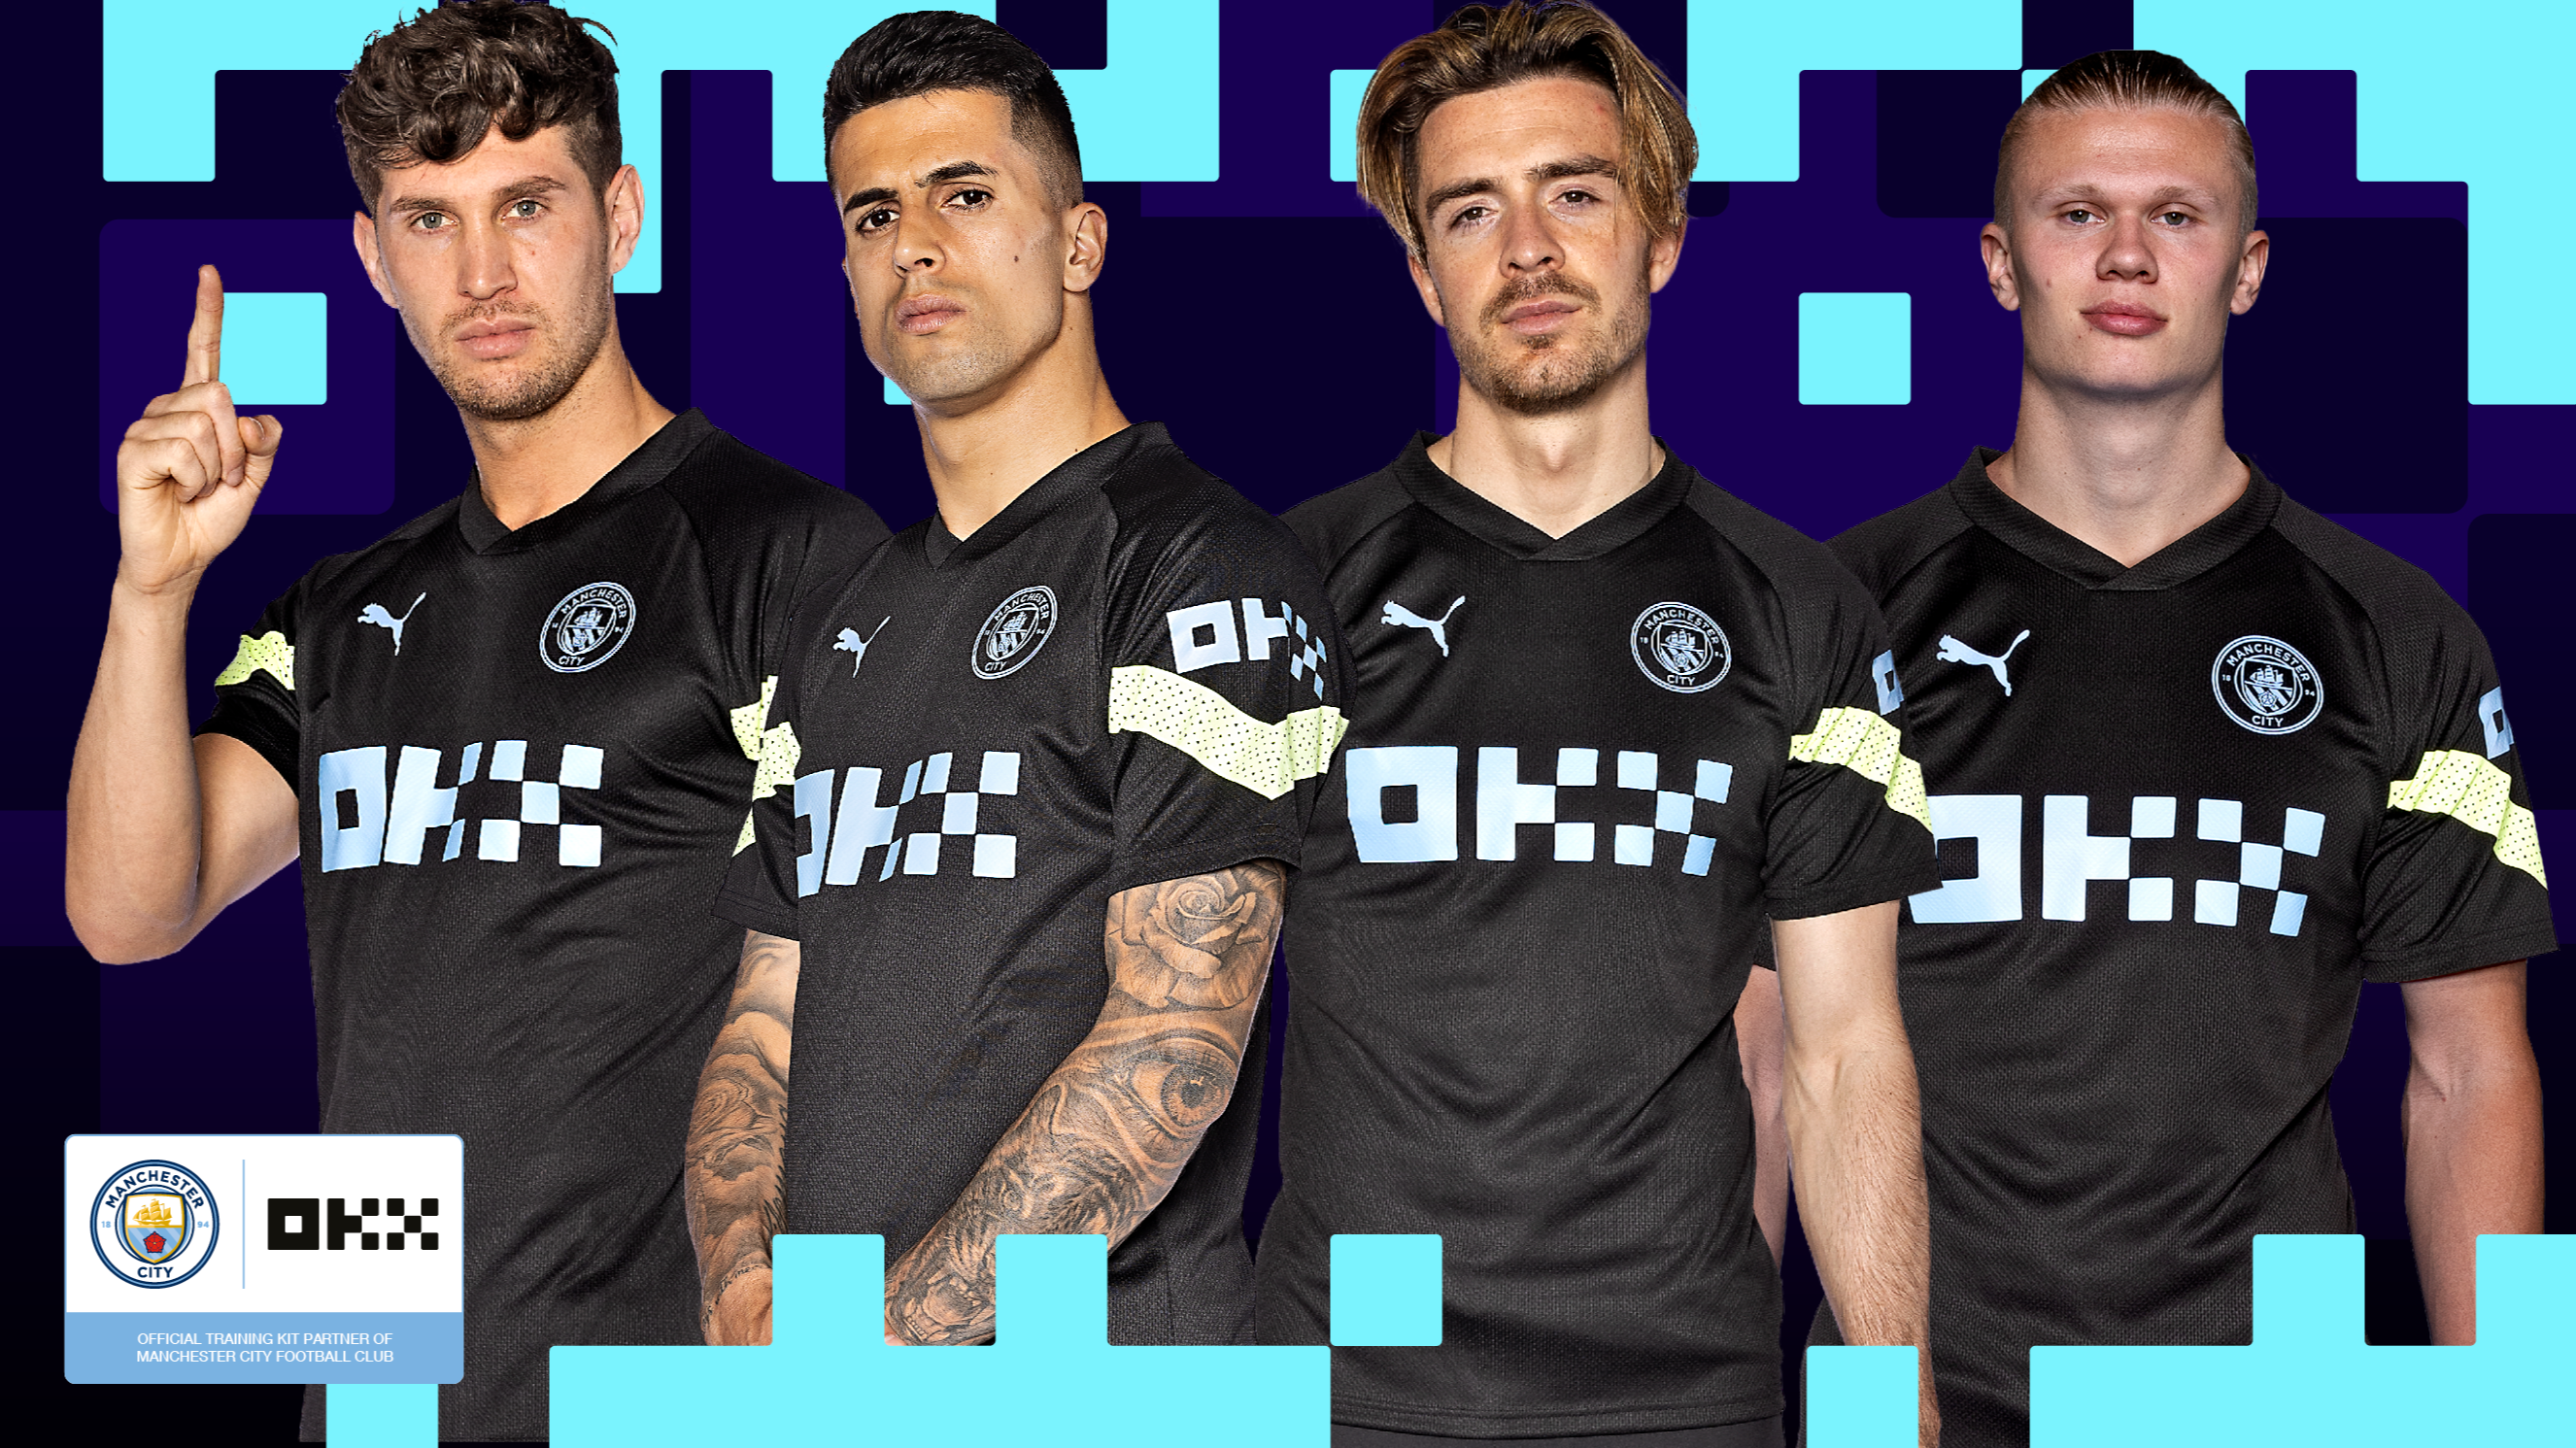 The OKX exchange spends over $ 20 million to sponsor training jerseys for Manchester City